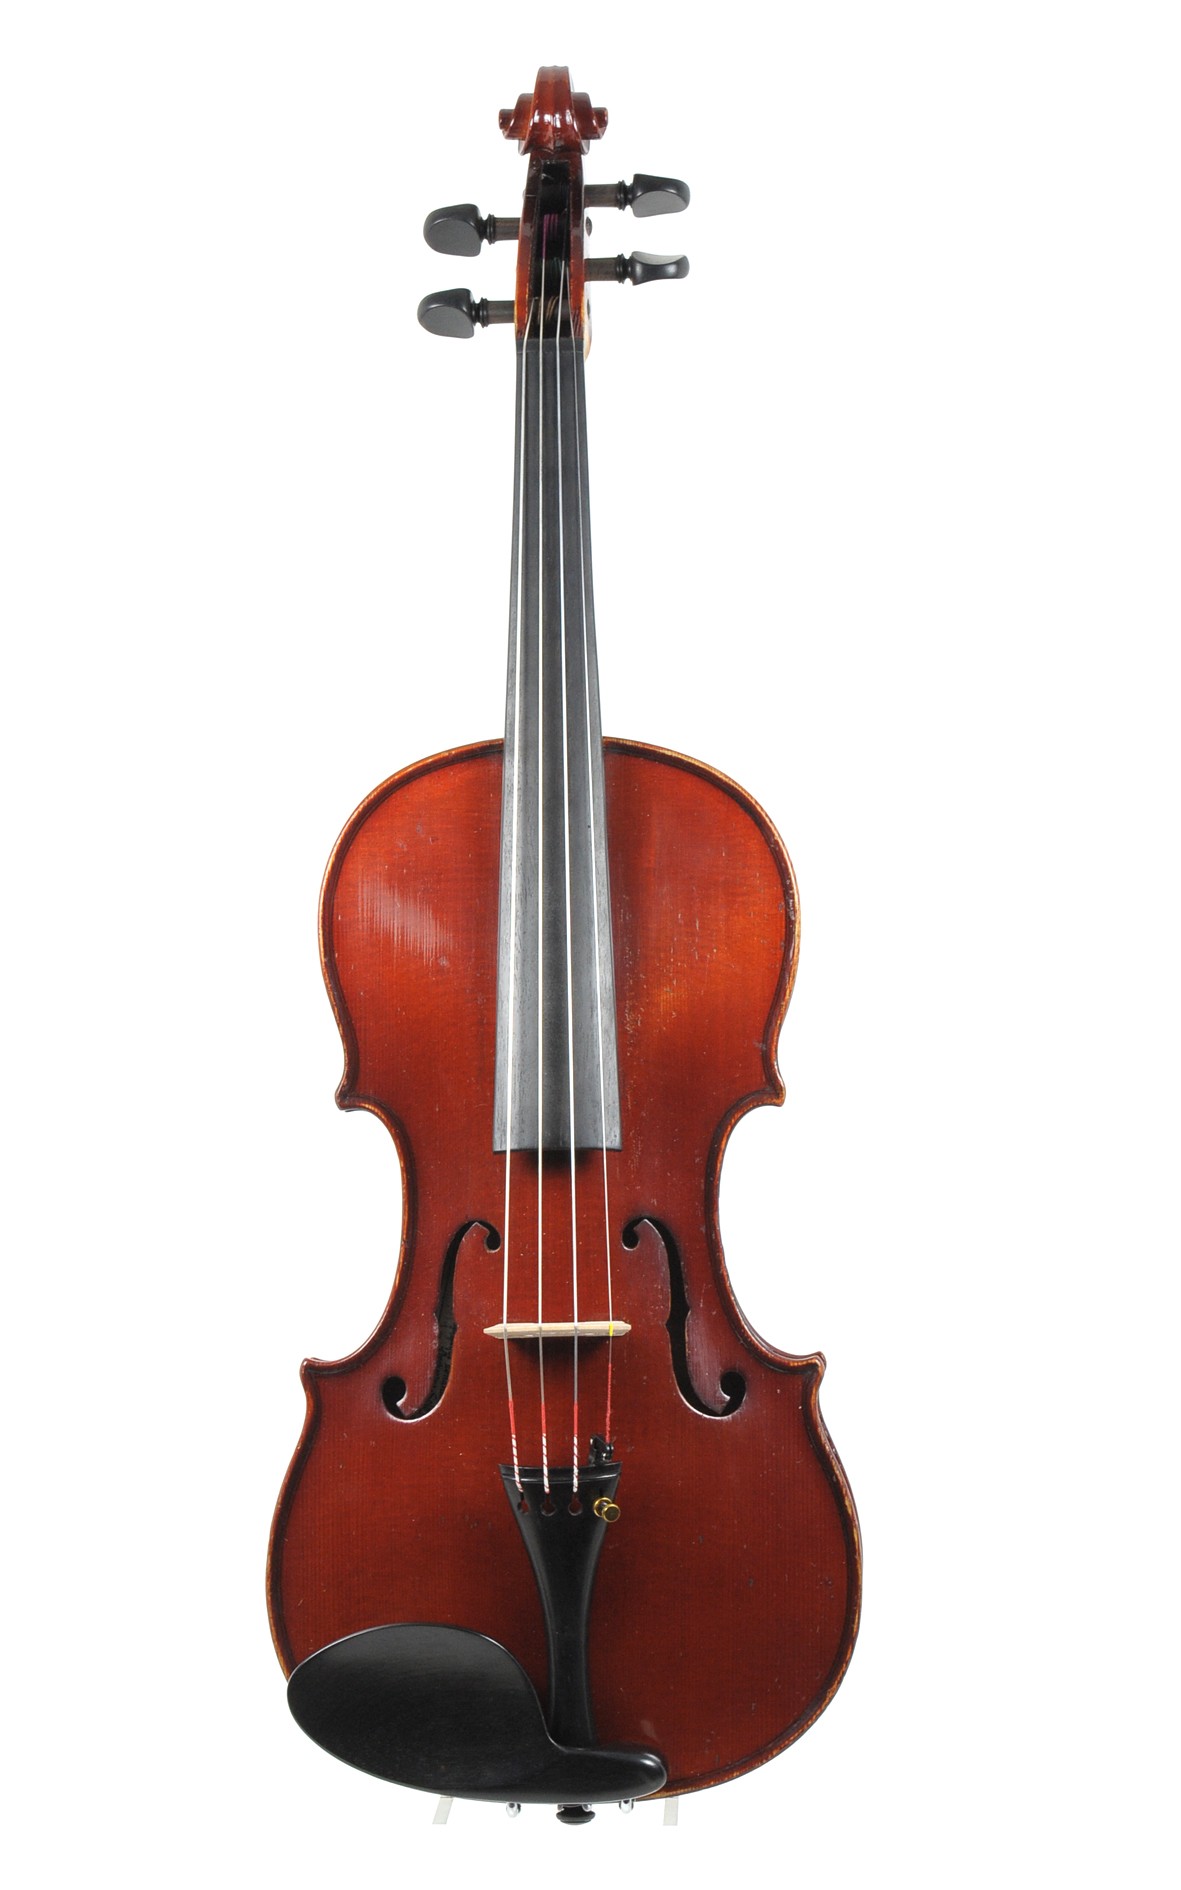 Frank-Reiner violin, Hamburg 1925, Orchestra-Solo - top